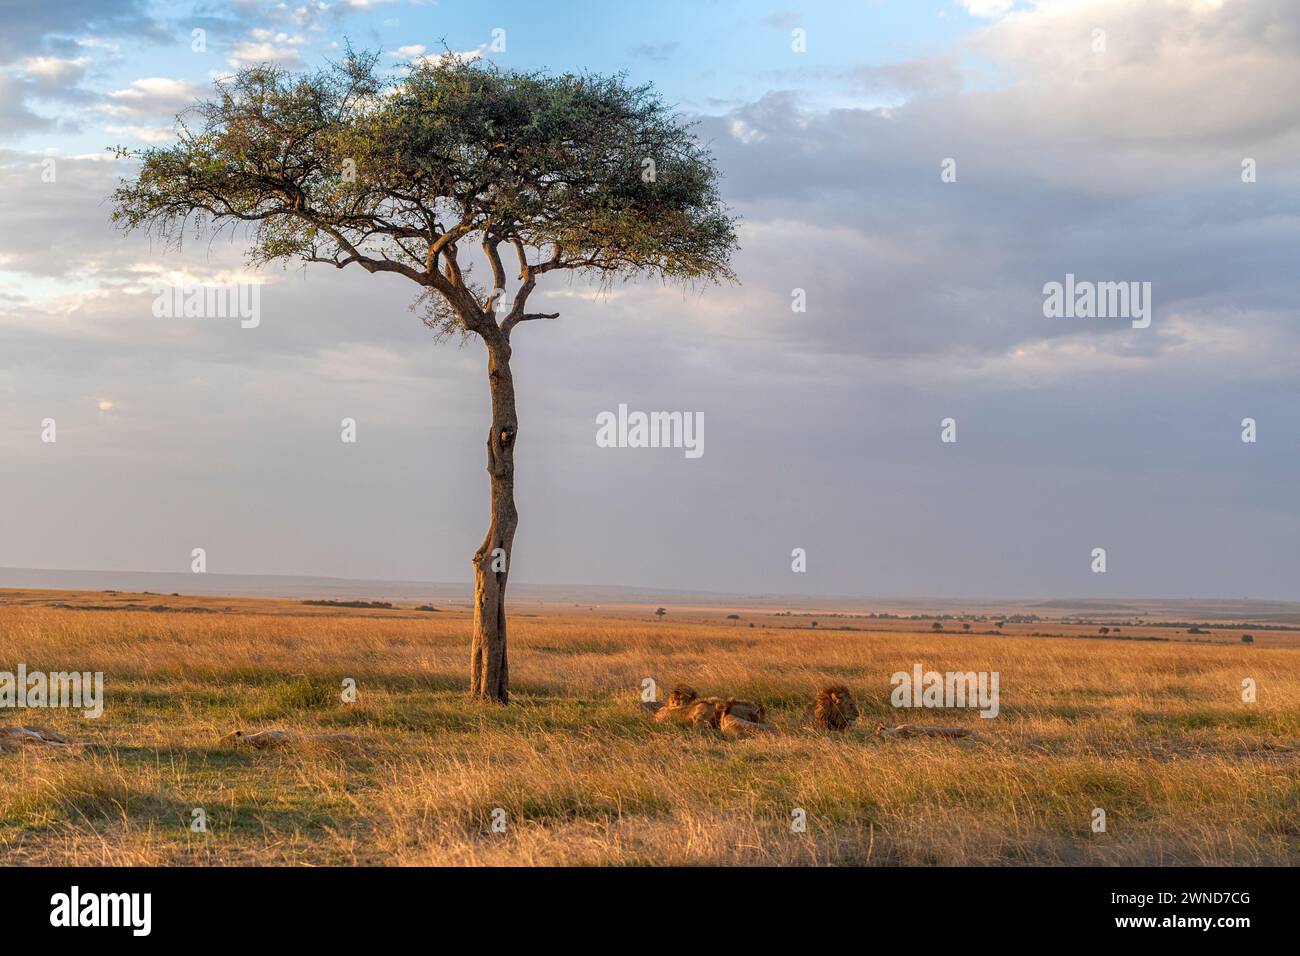 Savannah with lion in Maasai Mara, Kenya. Stock Photo